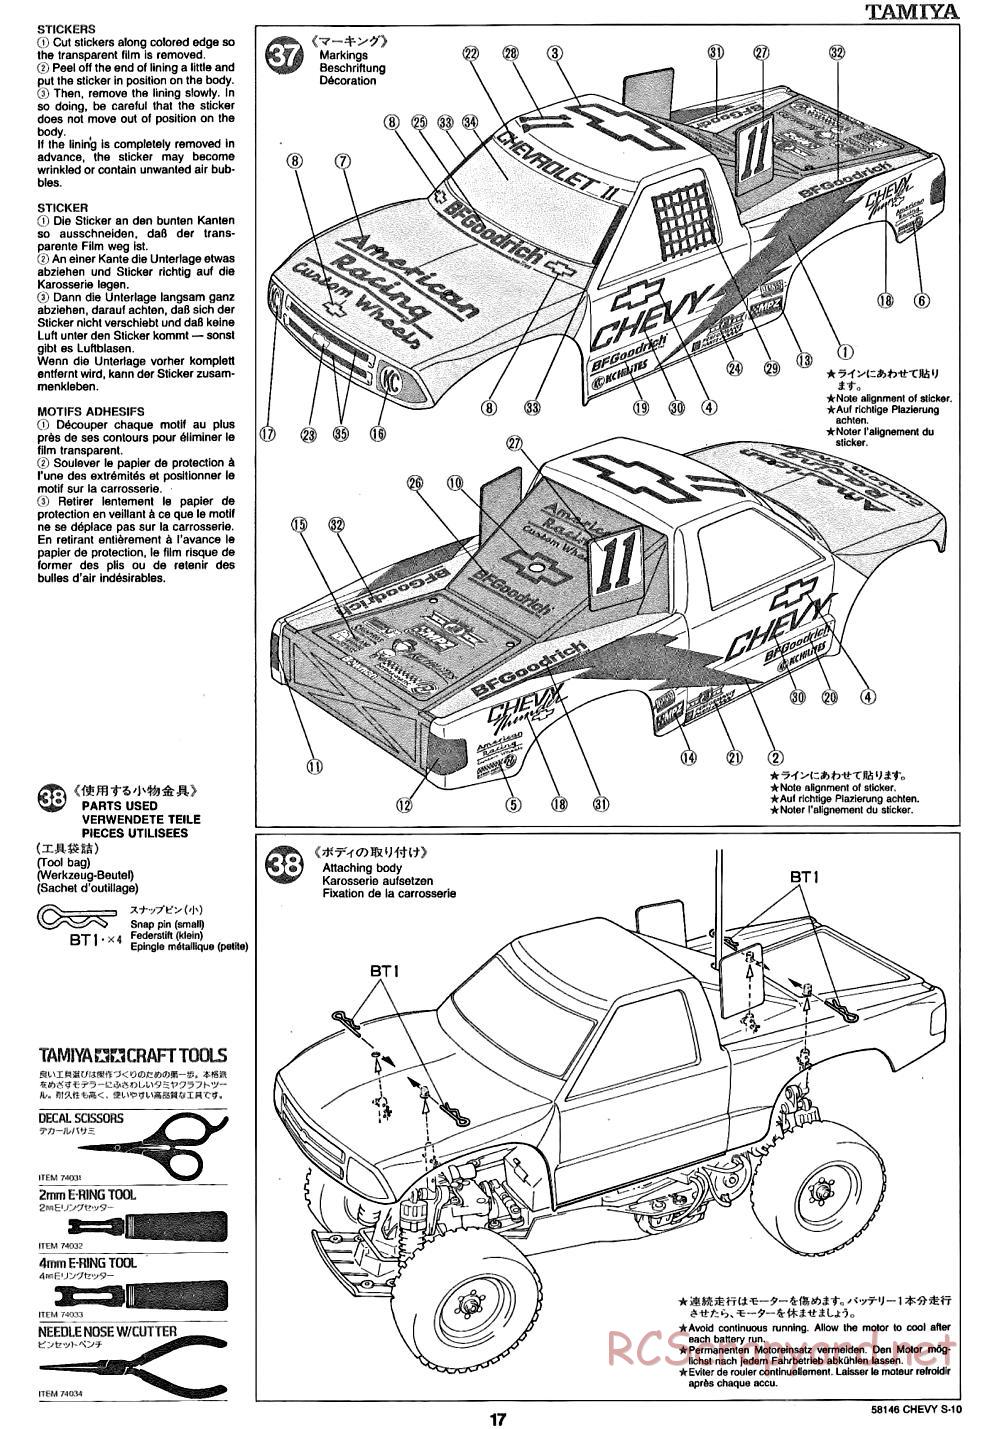 Tamiya - Chevy S-10 Chassis - Manual - Page 17